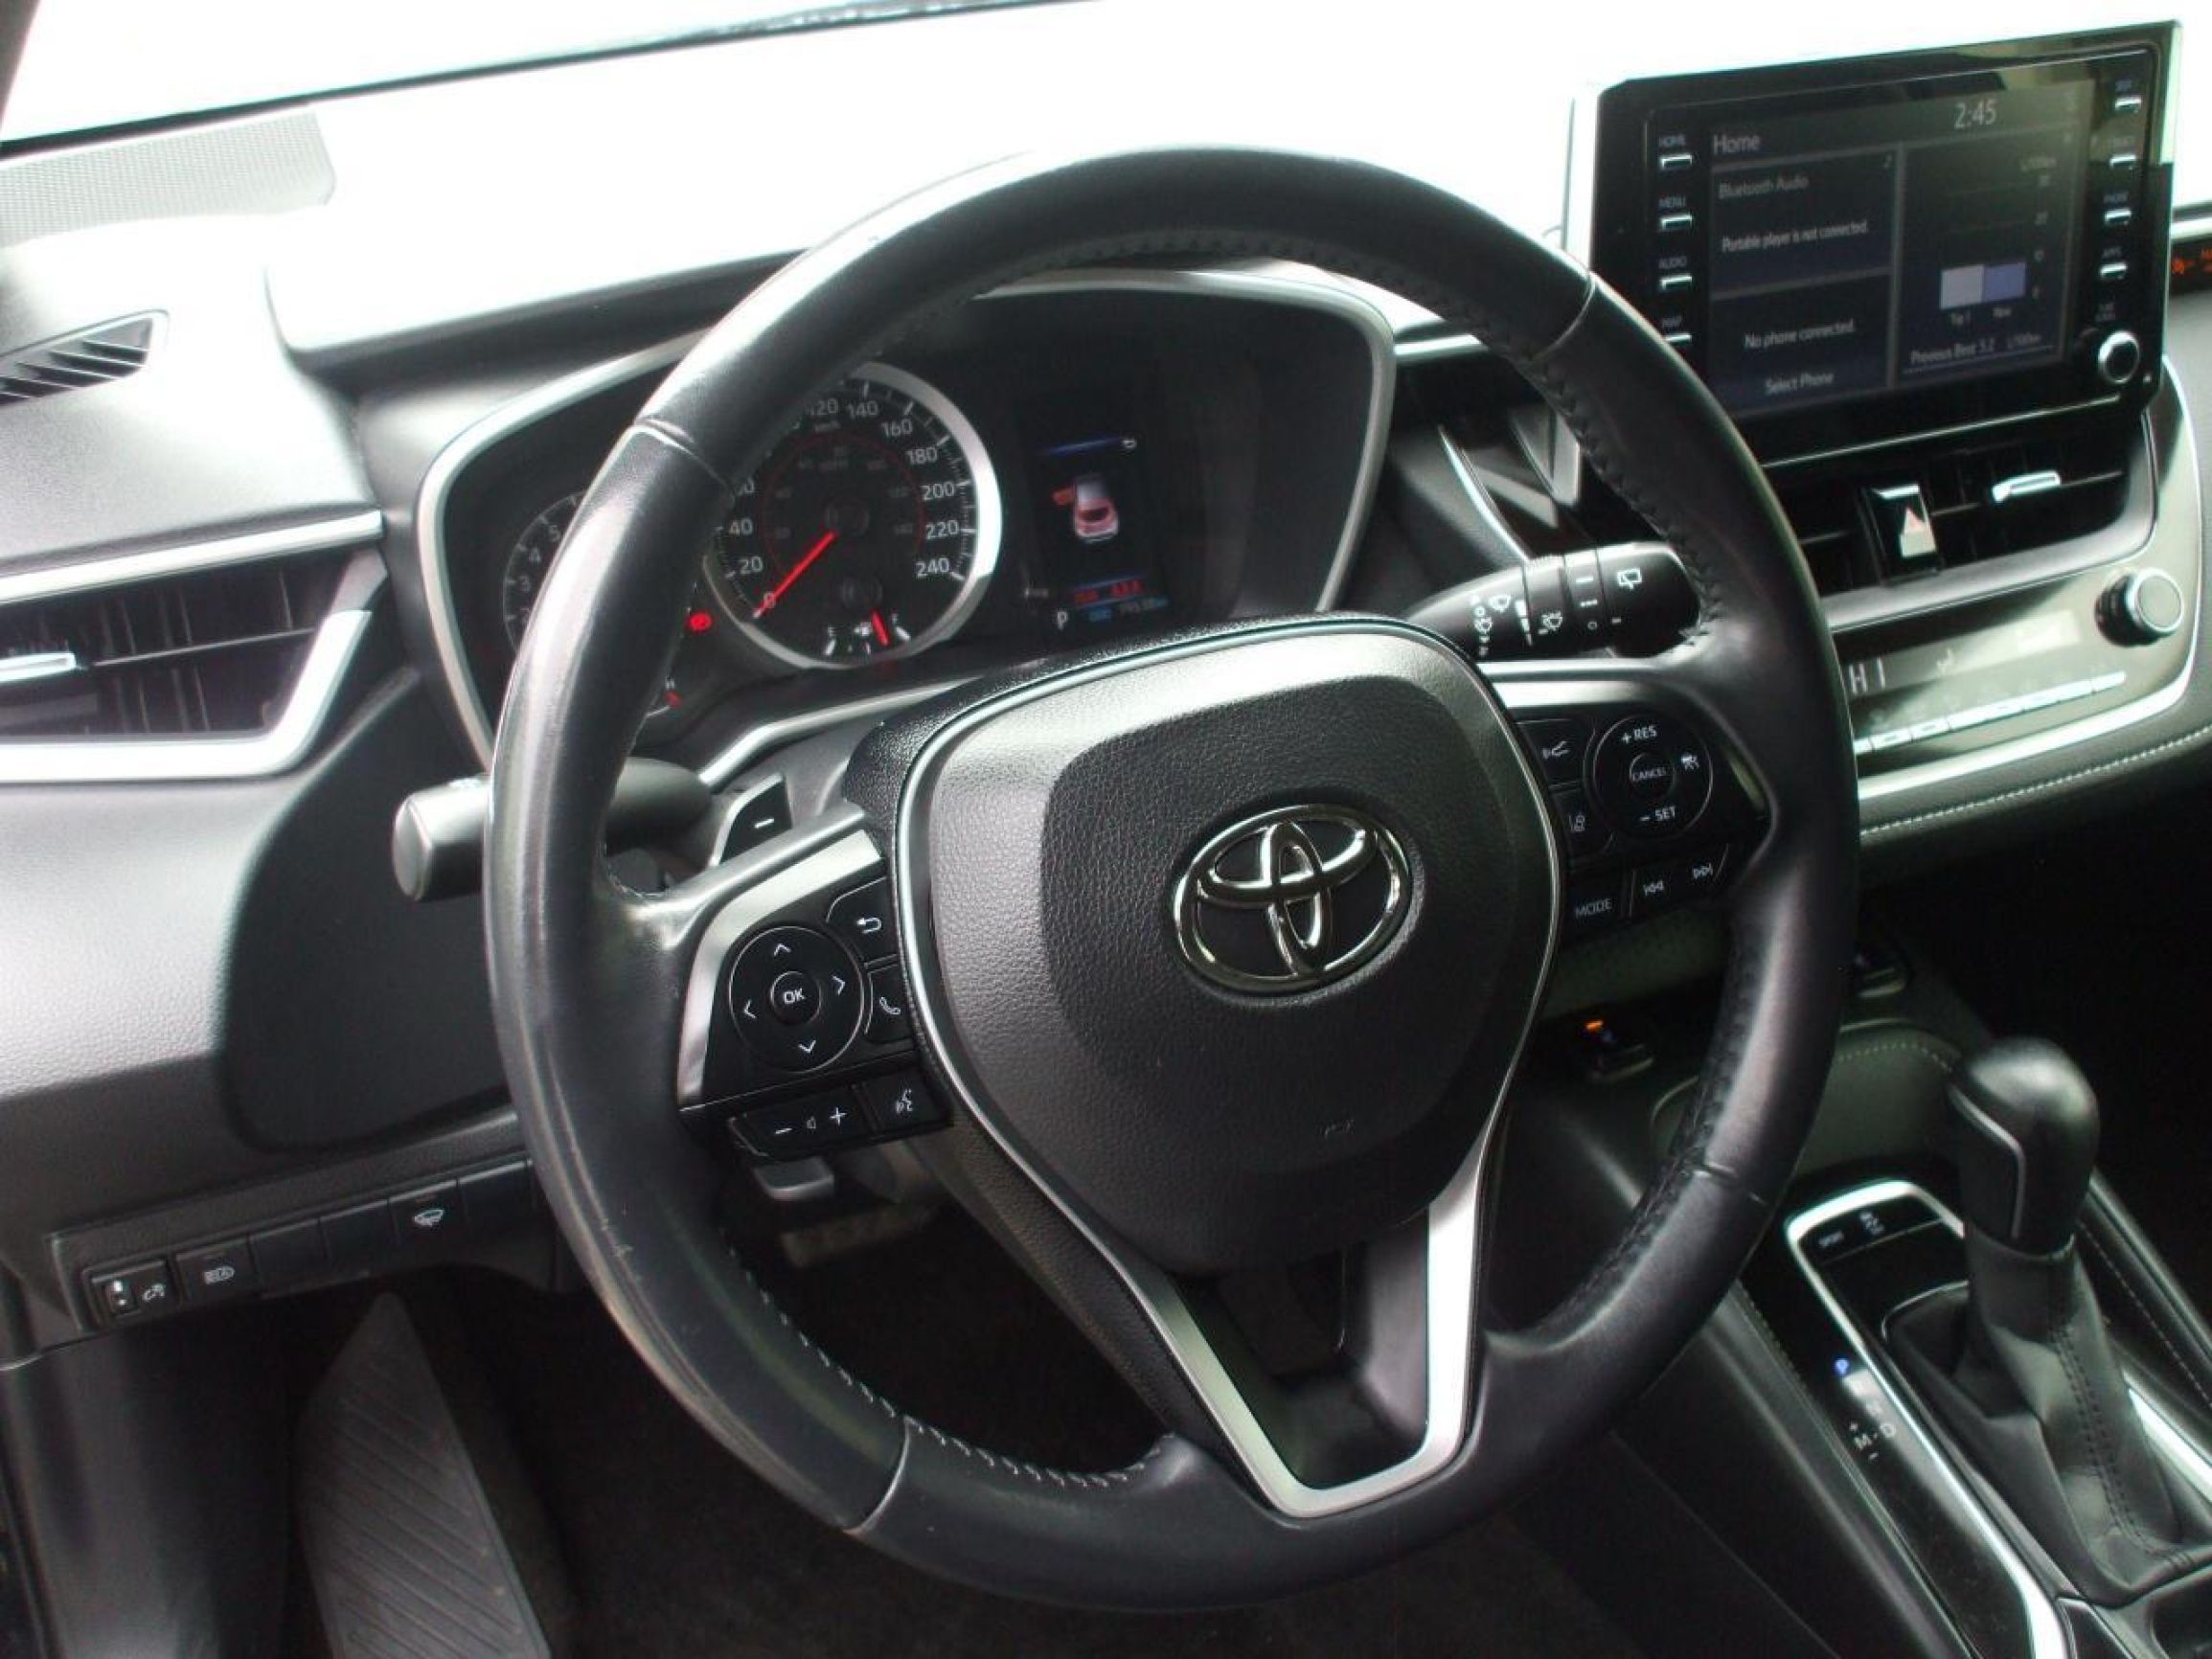 2019 Toyota Corolla SE,Certified,Tinted,Bluetooth,Backup Camera,Alloys